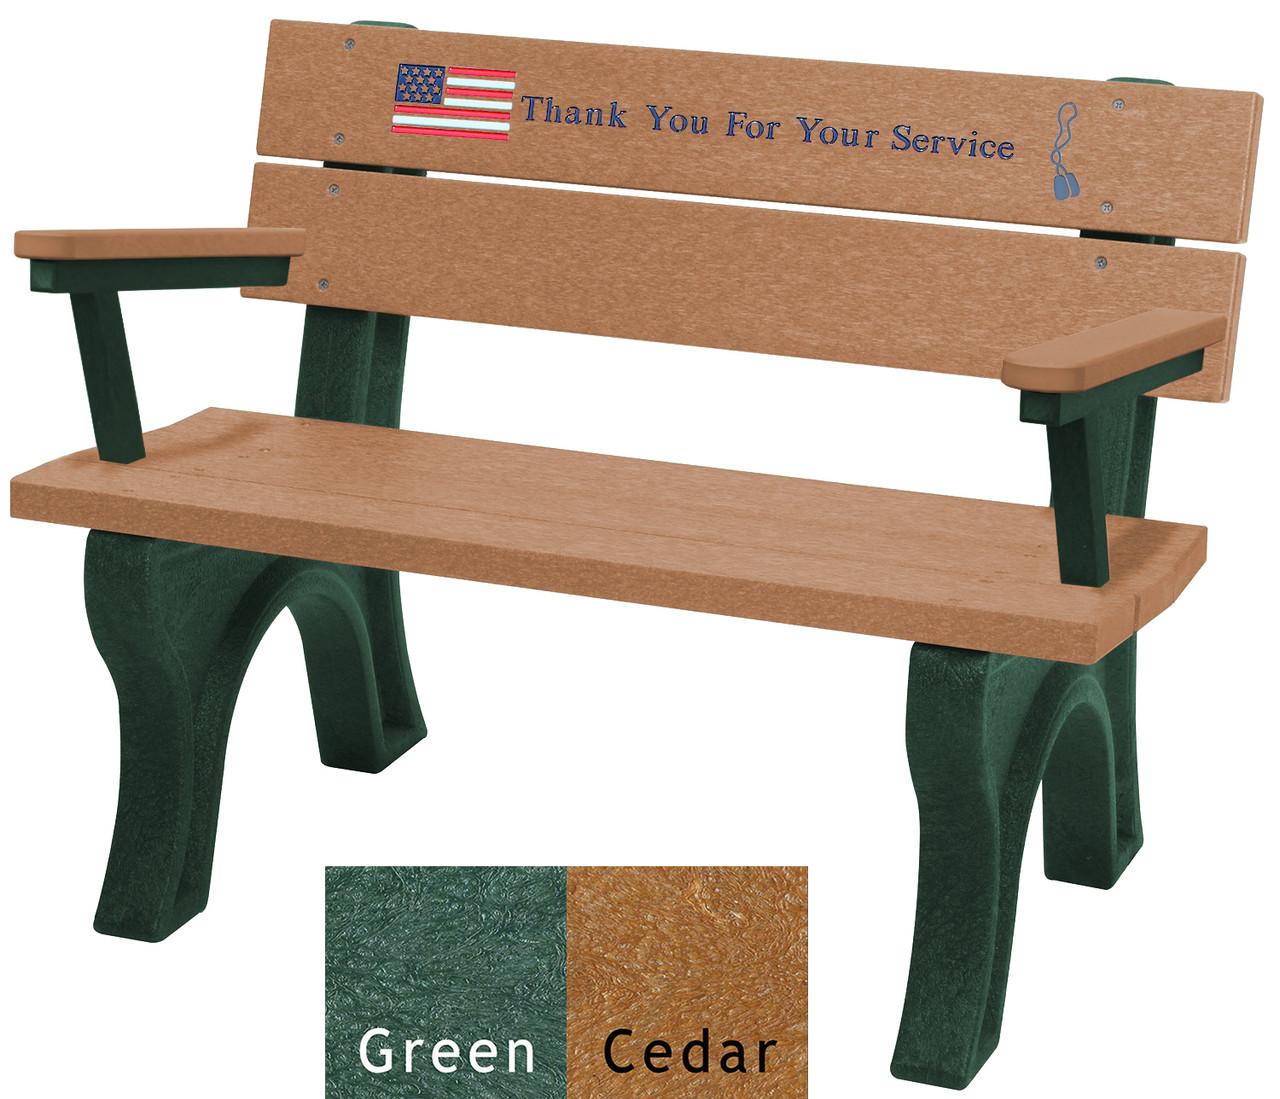 Green and Cedar